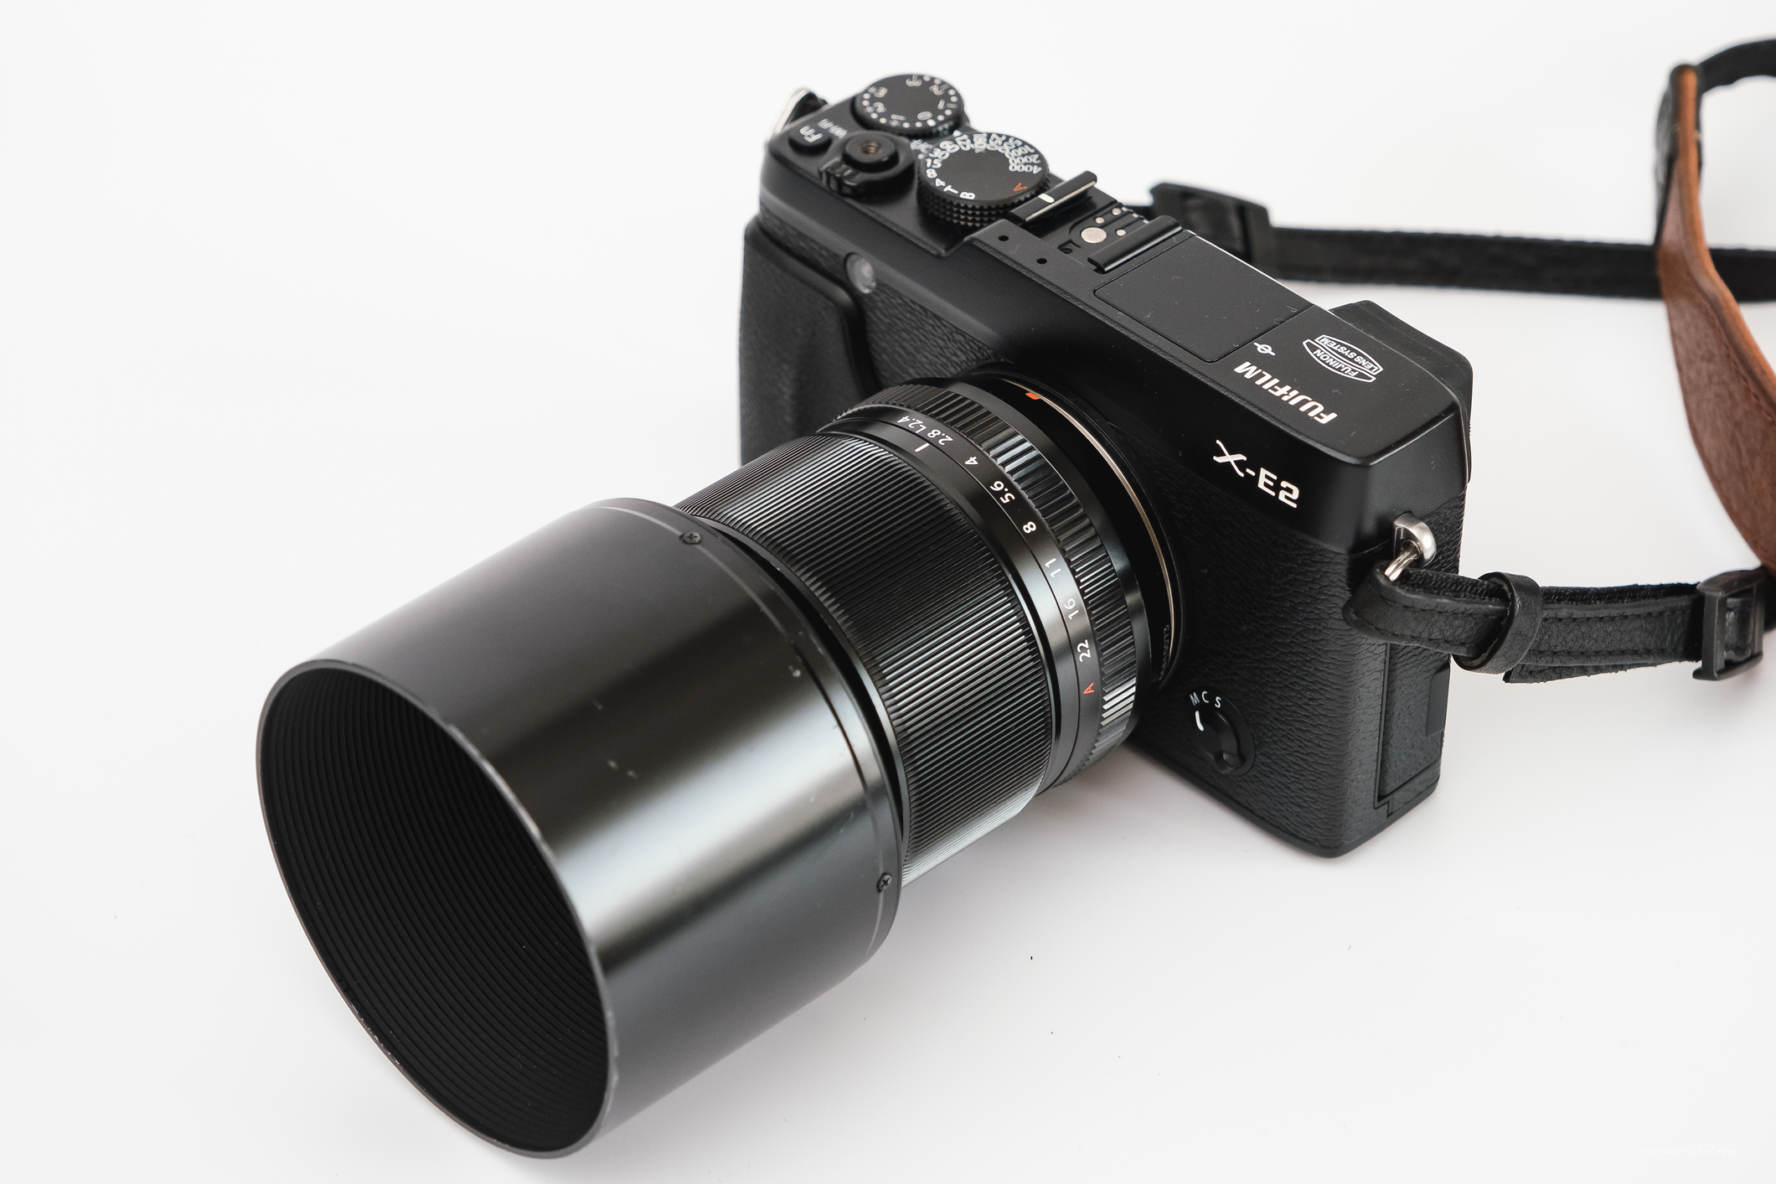 XF60mm F2.4 R Macro 富士フイルム FUJIFILM レンズ レンズ(単焦点) カメラ 家電・スマホ・カメラ おすすめ